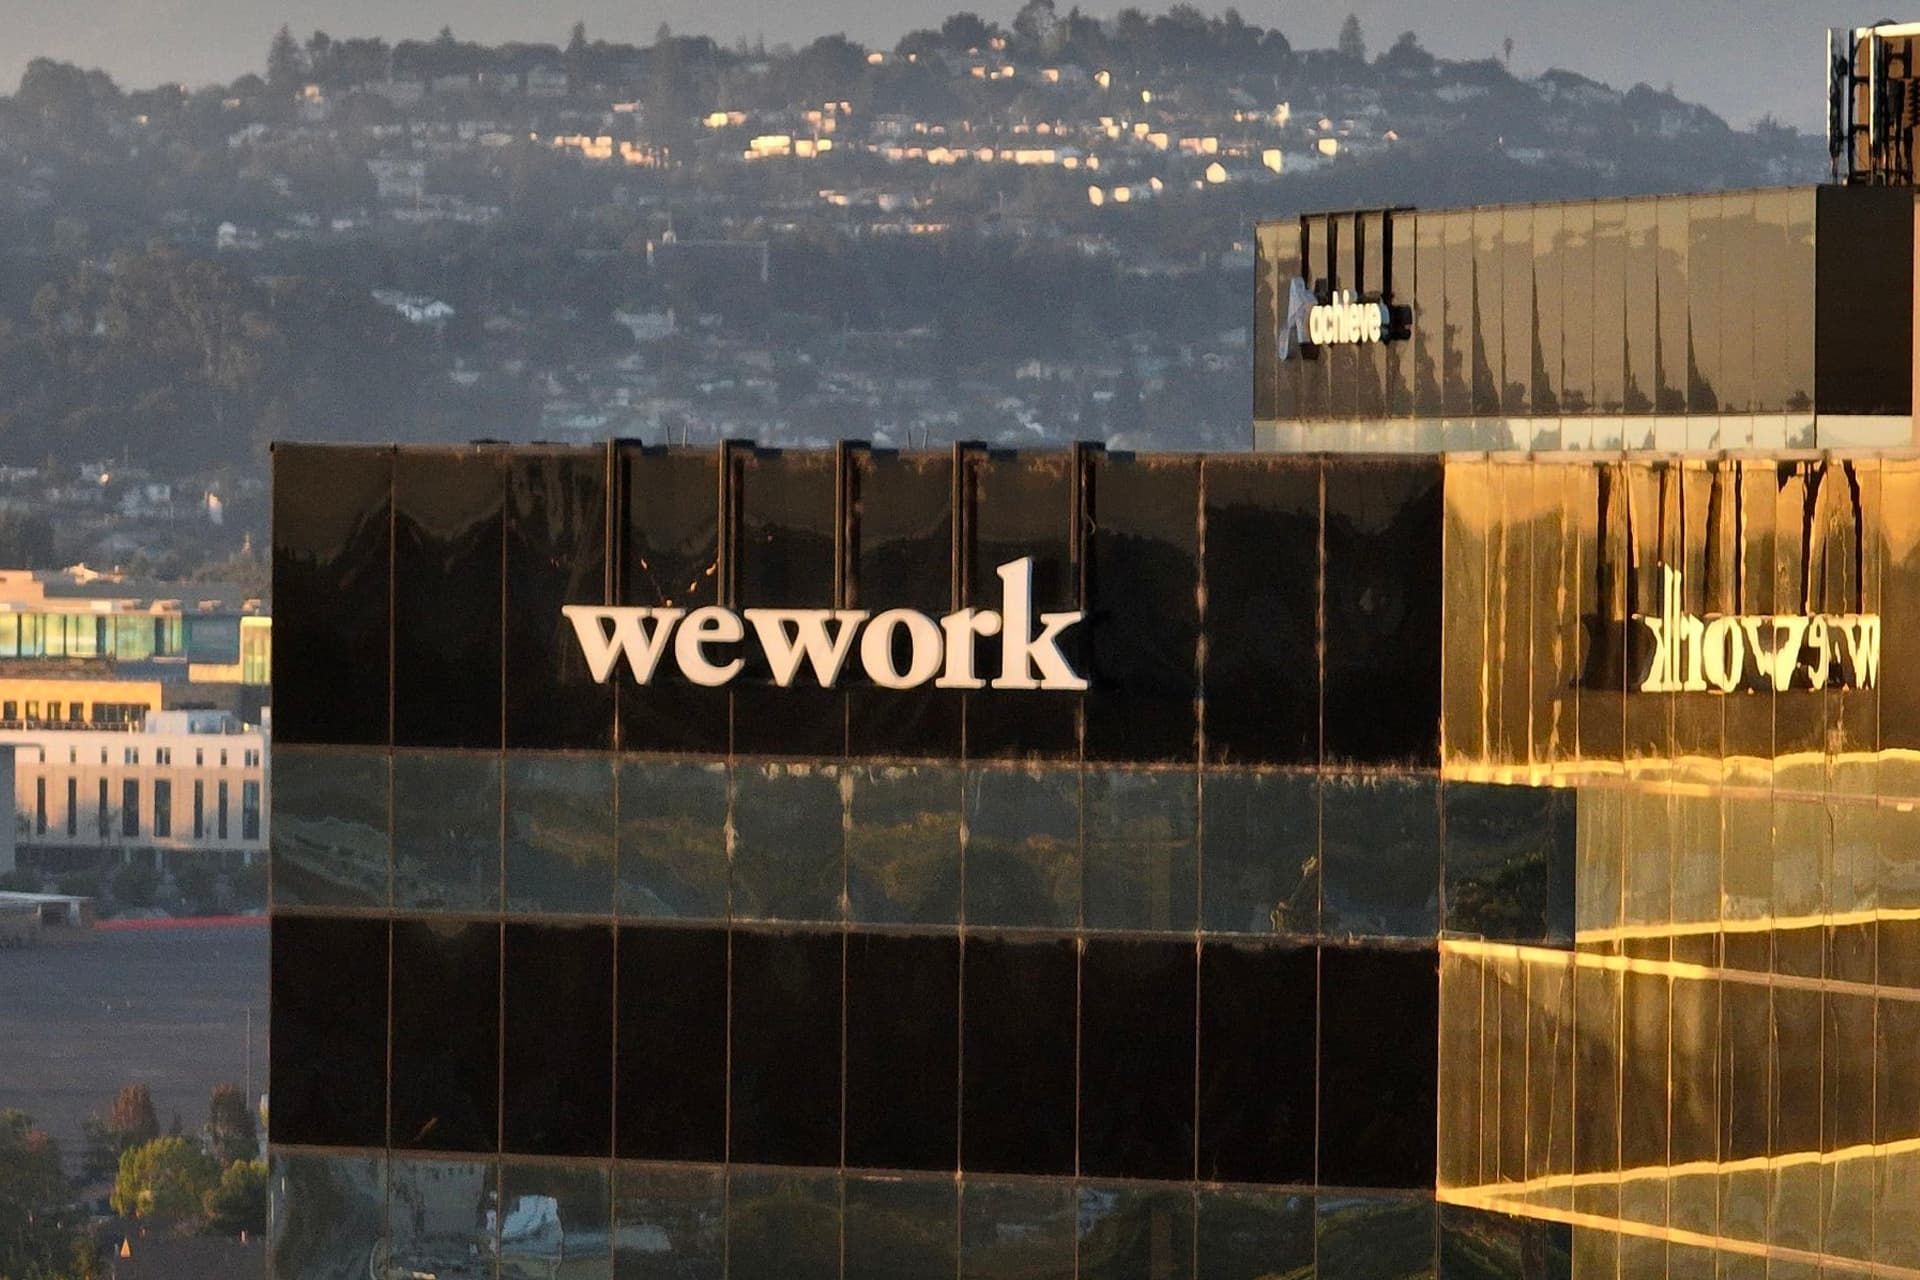 لوگو وی ورک / WeWork روی ساختمان شرکت